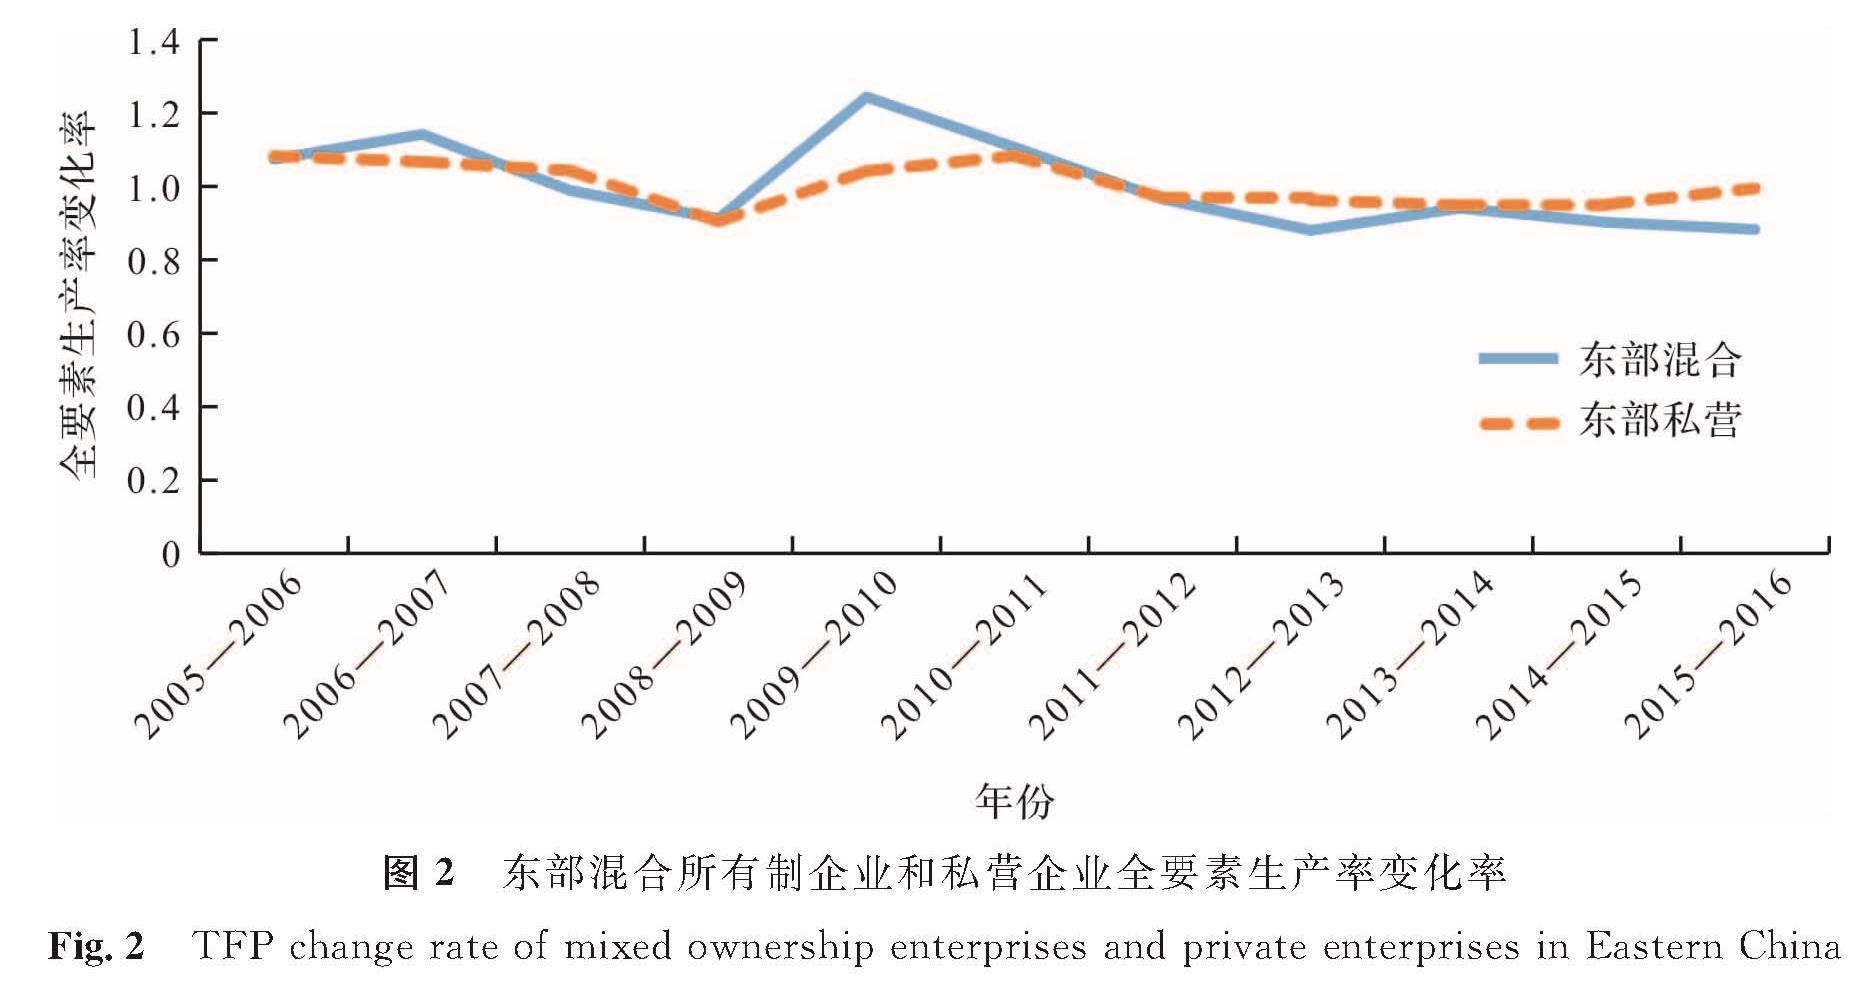 图2 东部混合所有制企业和私营企业全要素生产率变化率<br/>Fig.2 TFP change rate of mixed ownership enterprises and private enterprises in Eastern China